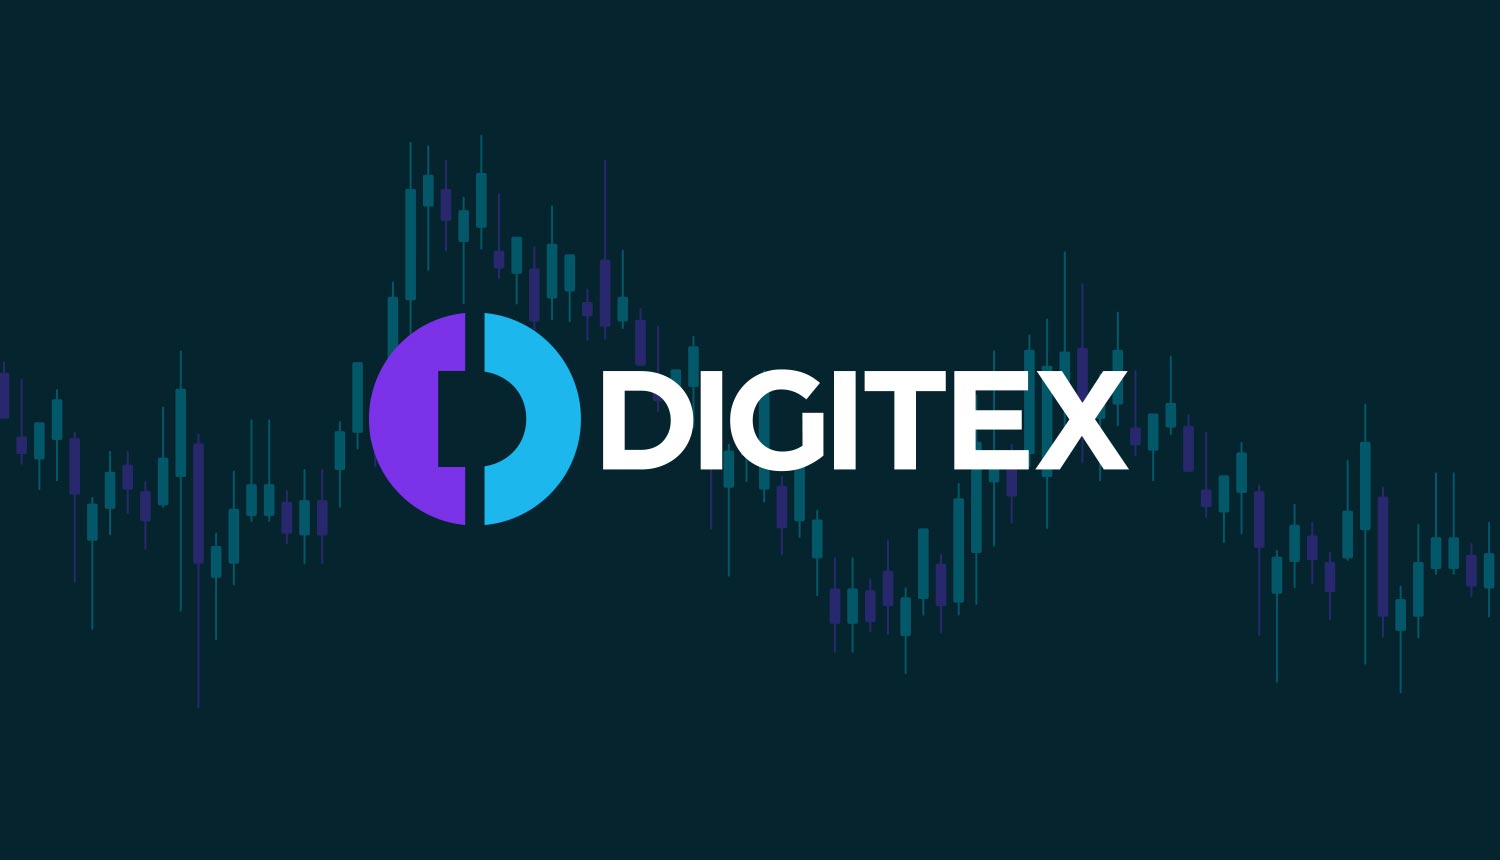  digitex futures price necessarily although market below 